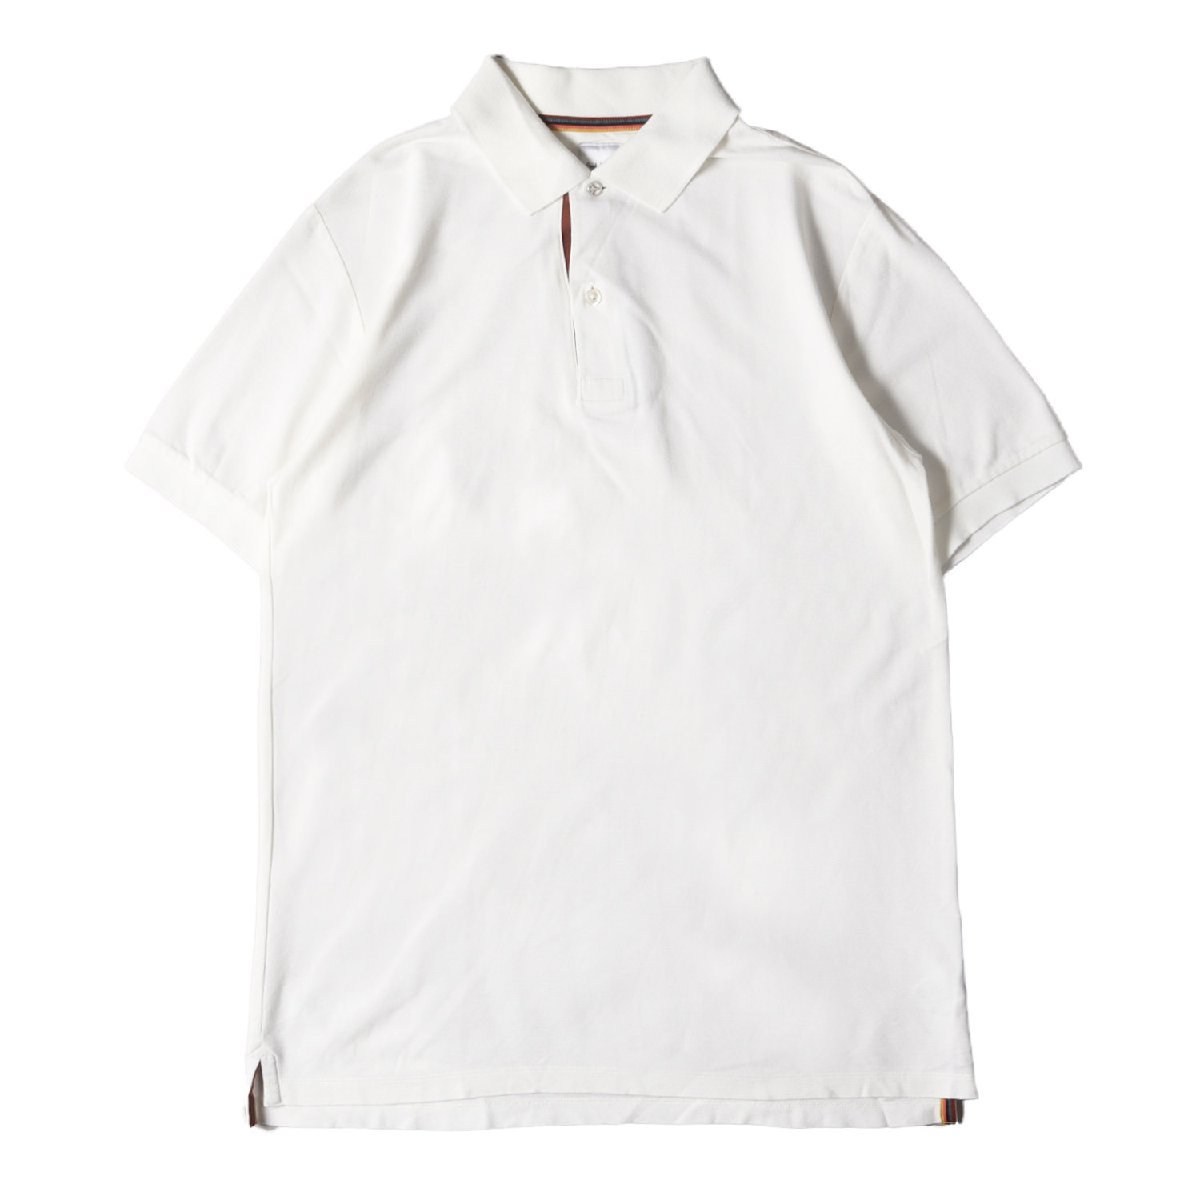 Paul Smith ポールスミス ポロシャツ サイズ:M アーティスト ストライプ プラケット 鹿の子 半袖 ポロシャツ ホワイト 日本製 ブランド